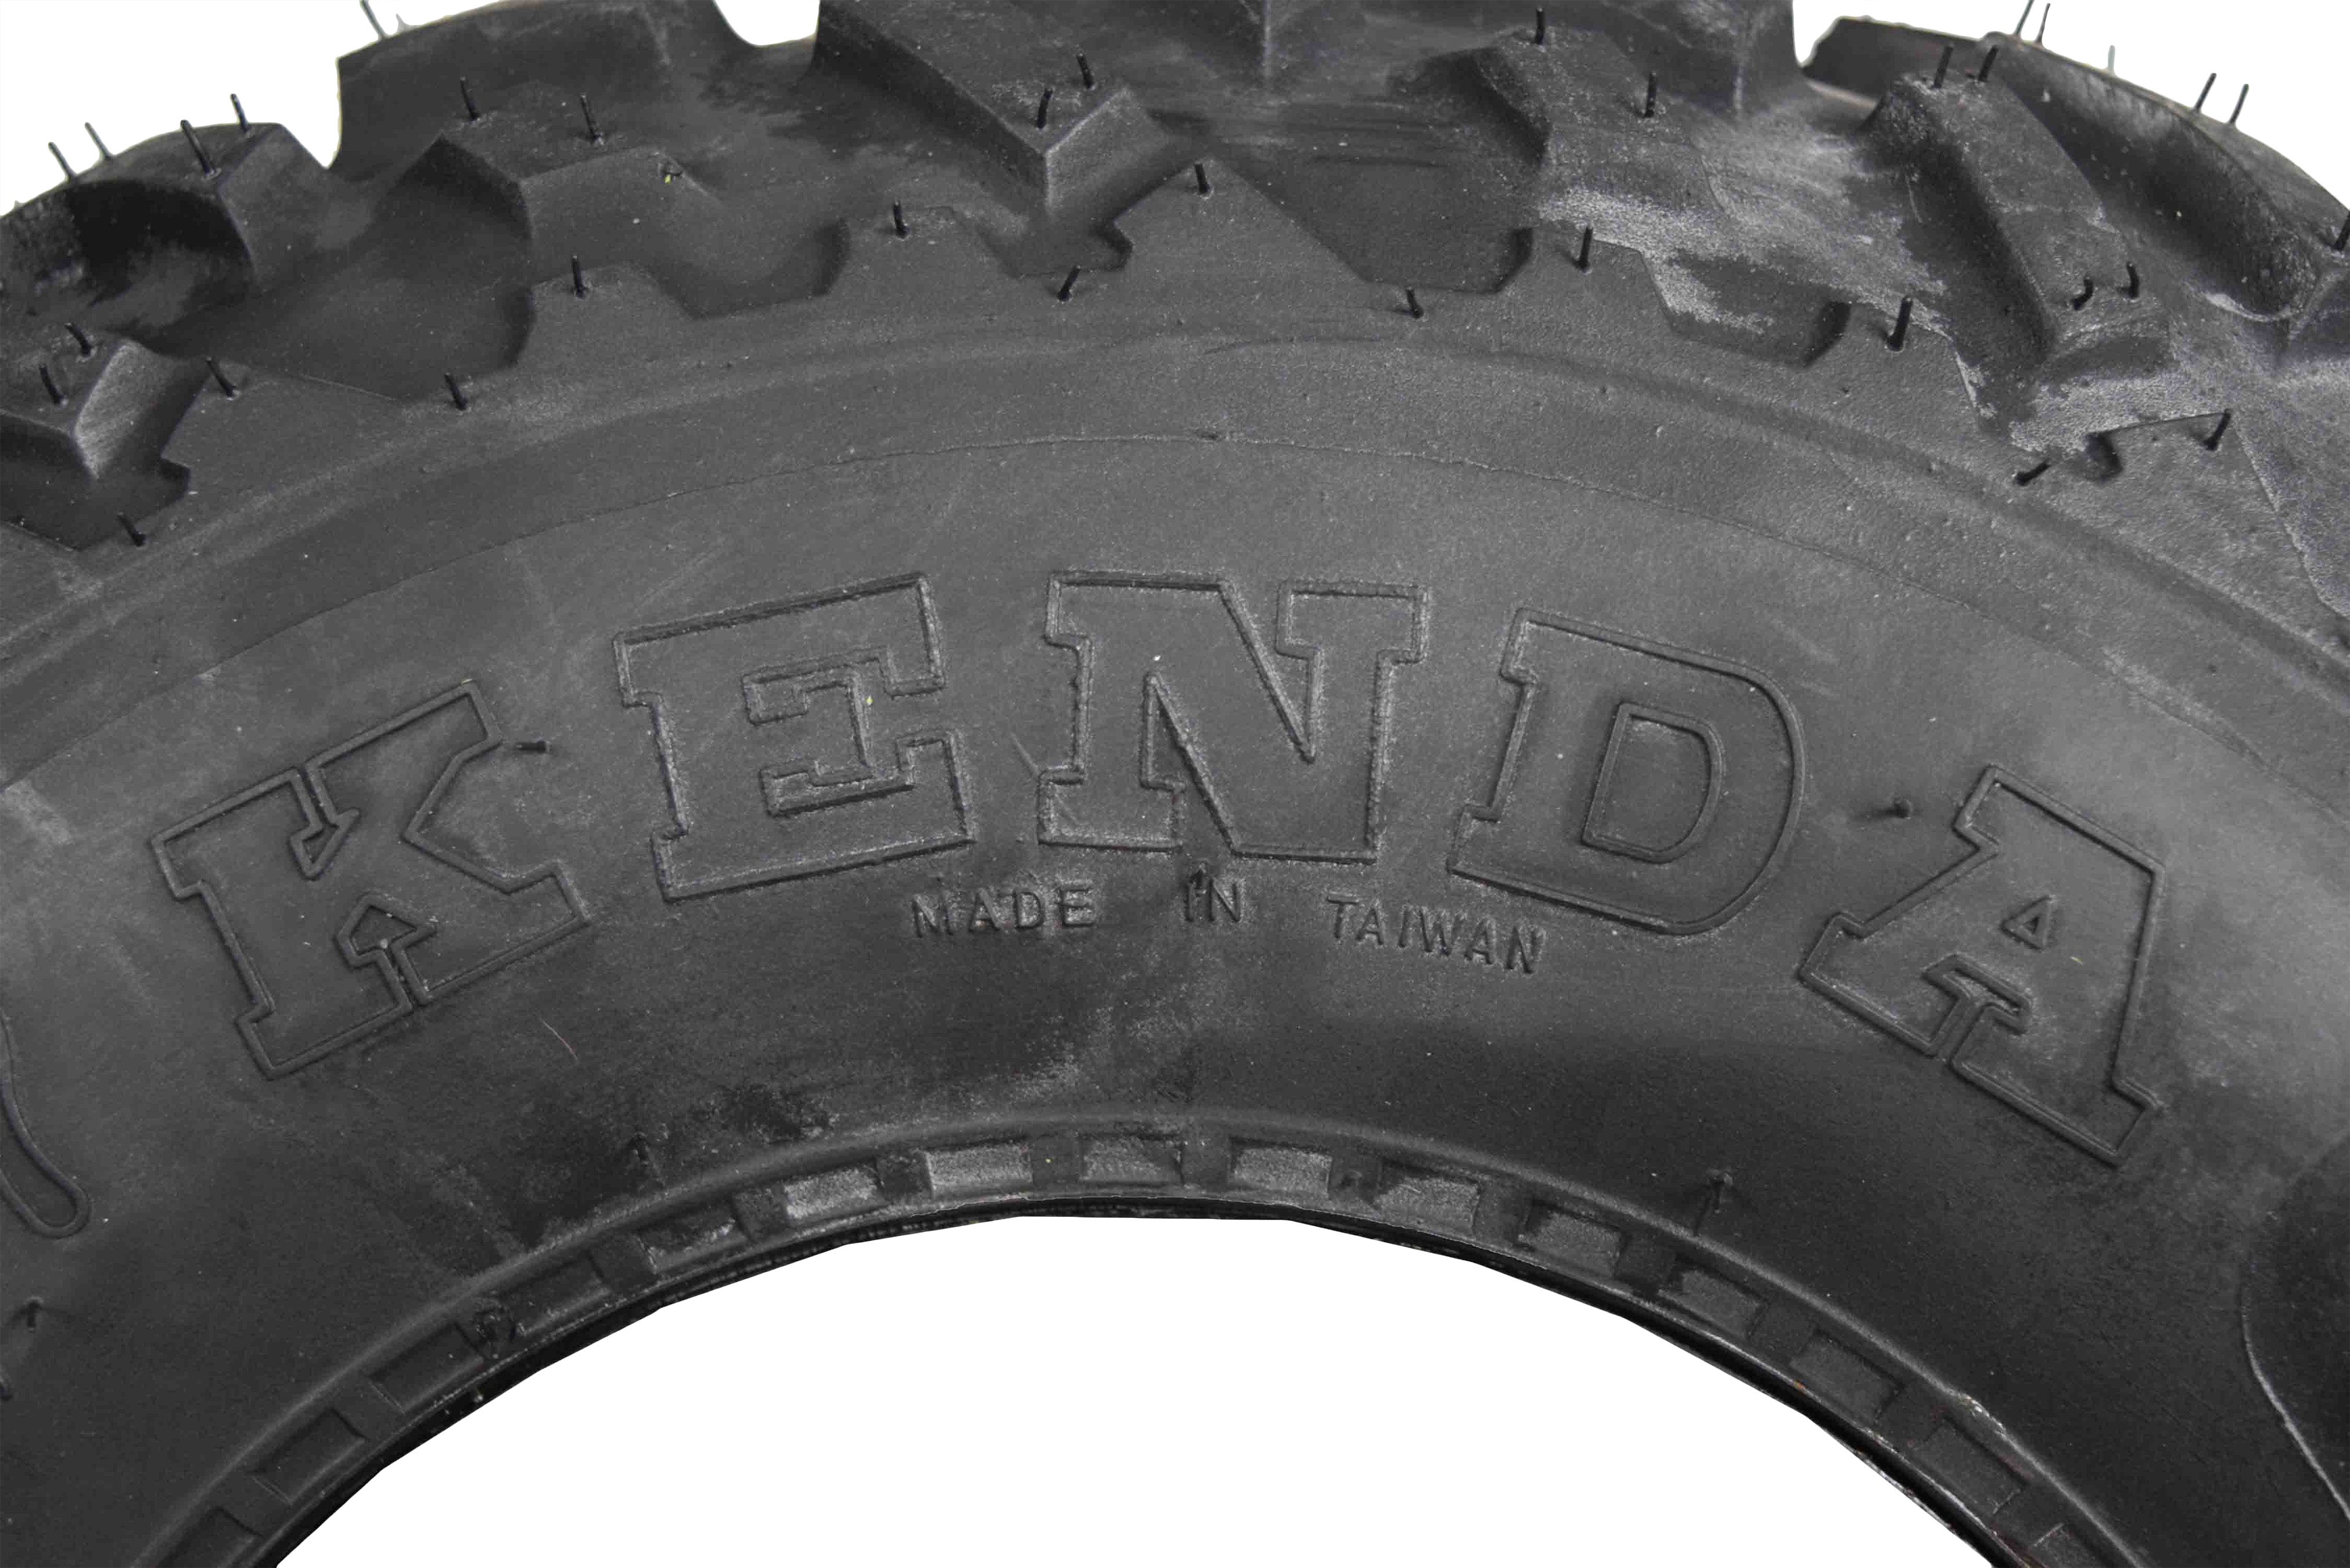 Kenda Pathfinder 18x7-7 2 PLY OEM Replacement Tire 18x7x7 K530 Single Tire